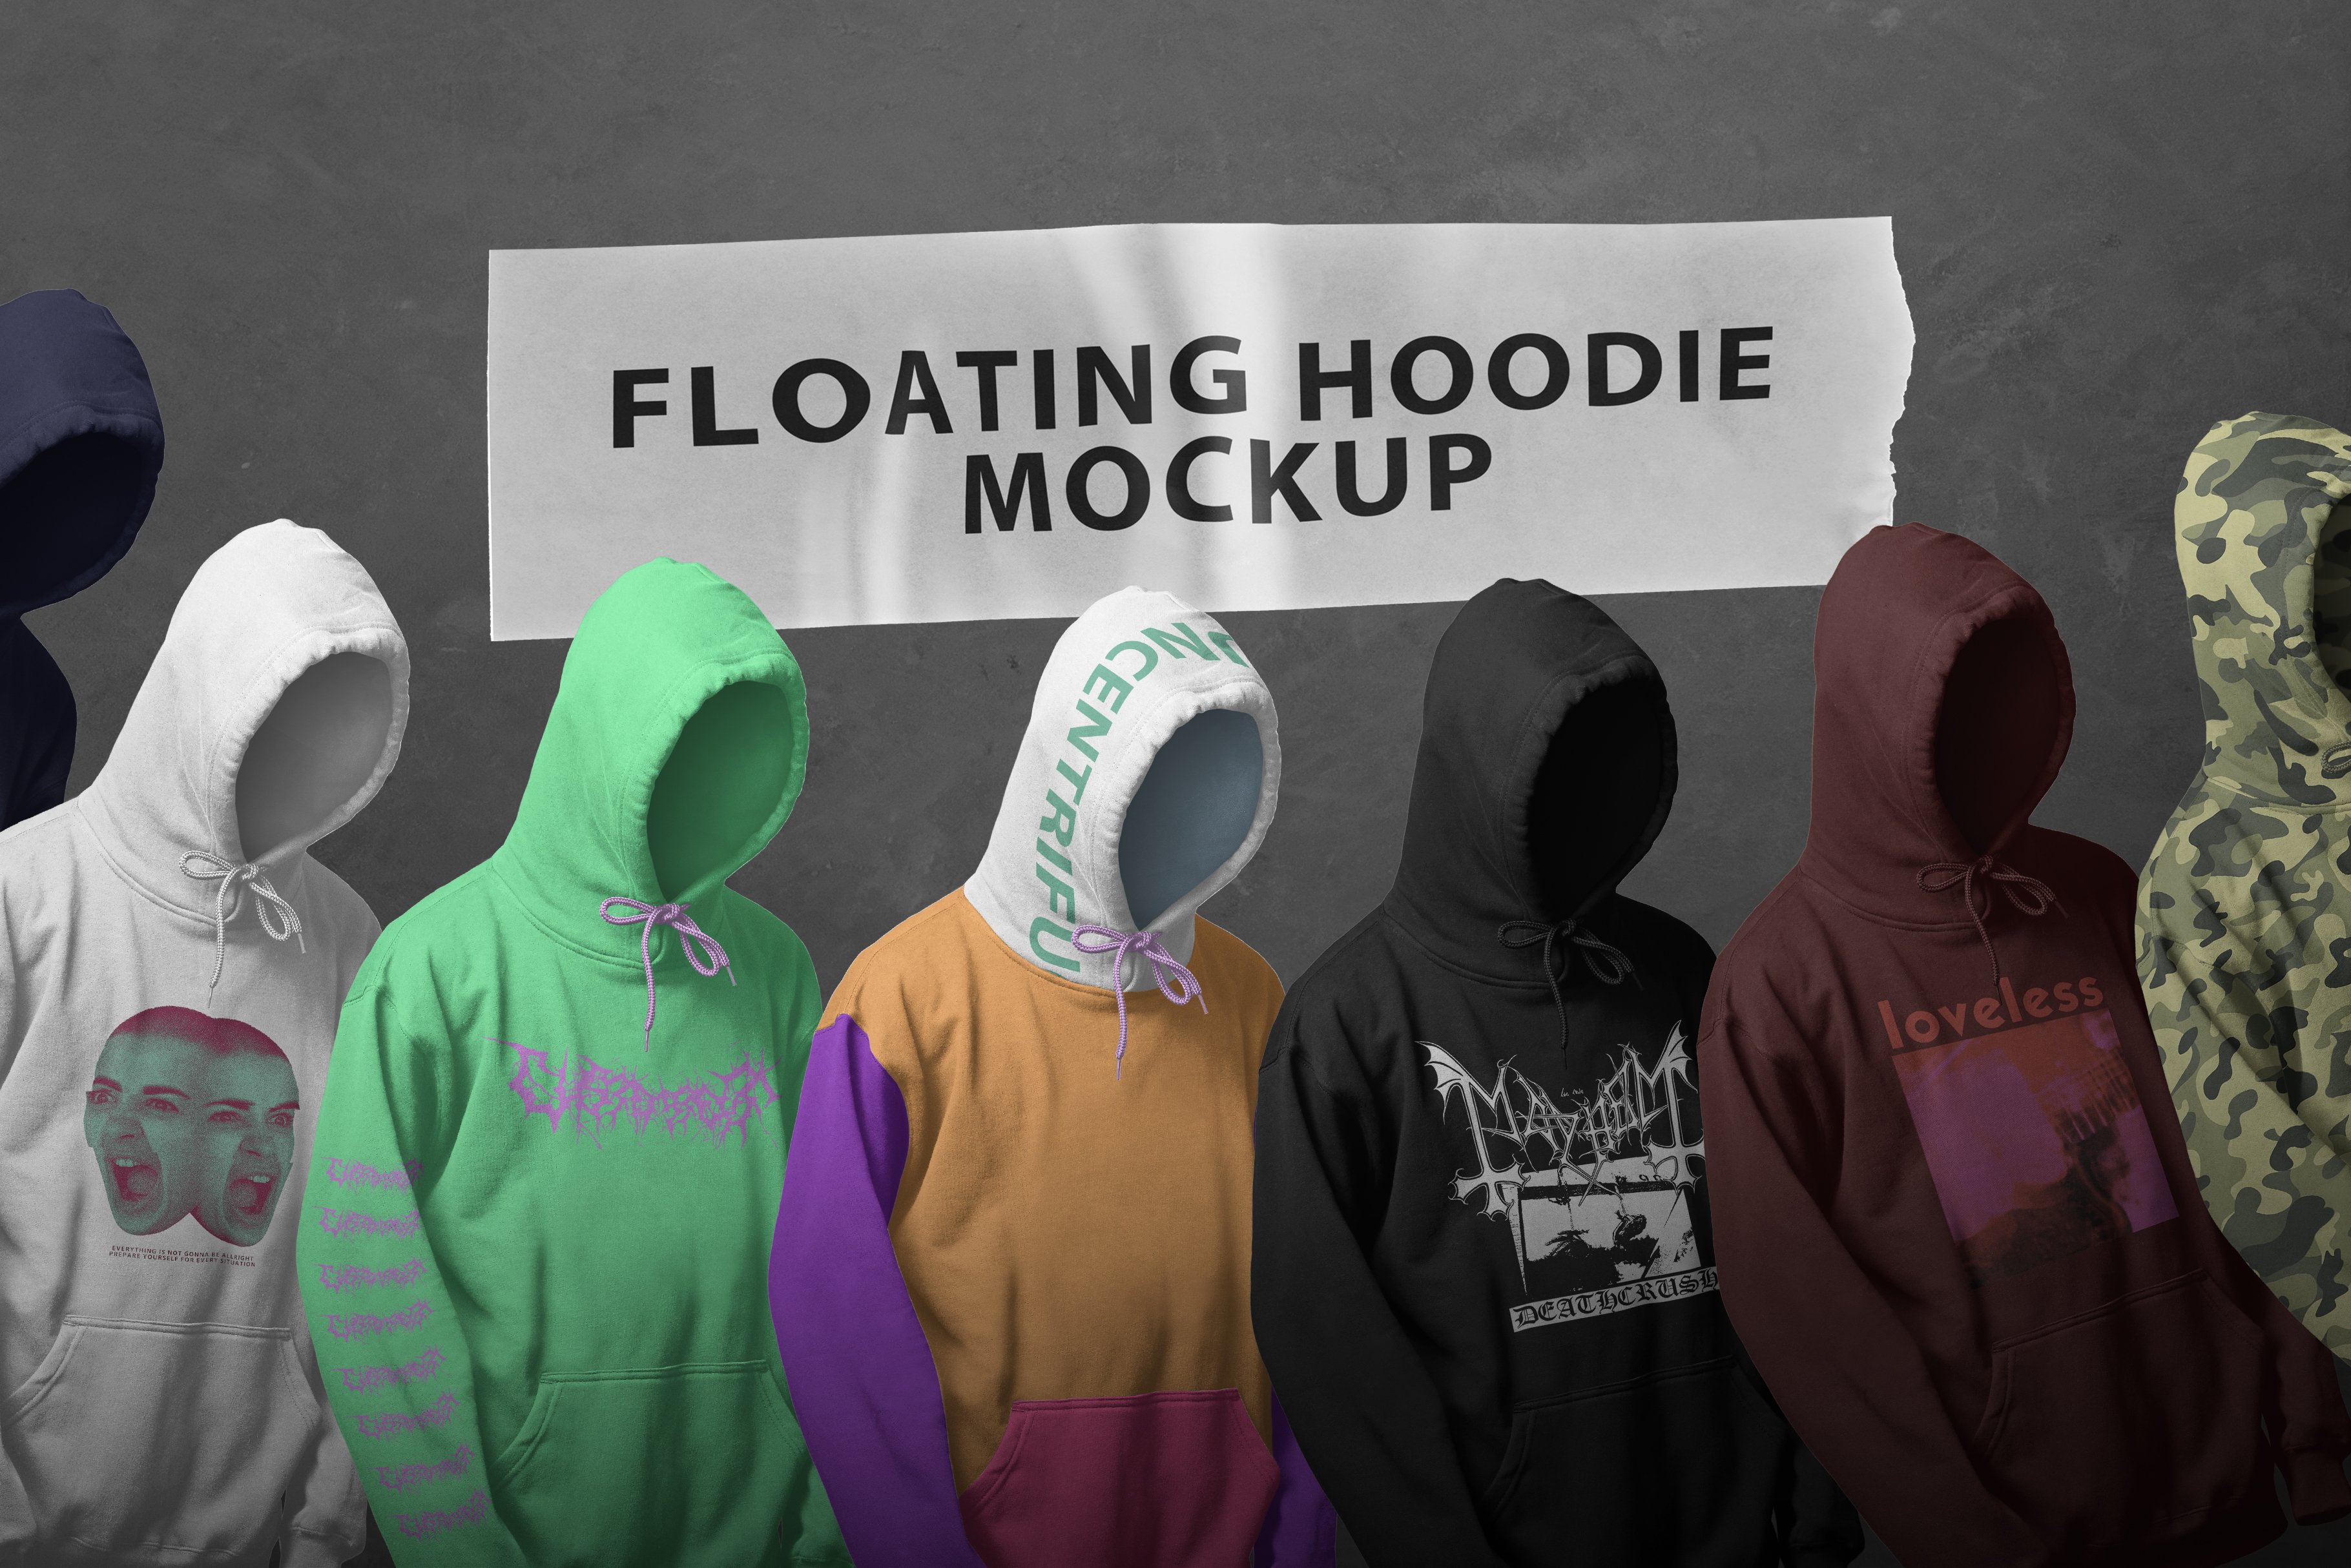 Realistic Floating Hoodie Mockup cover image.